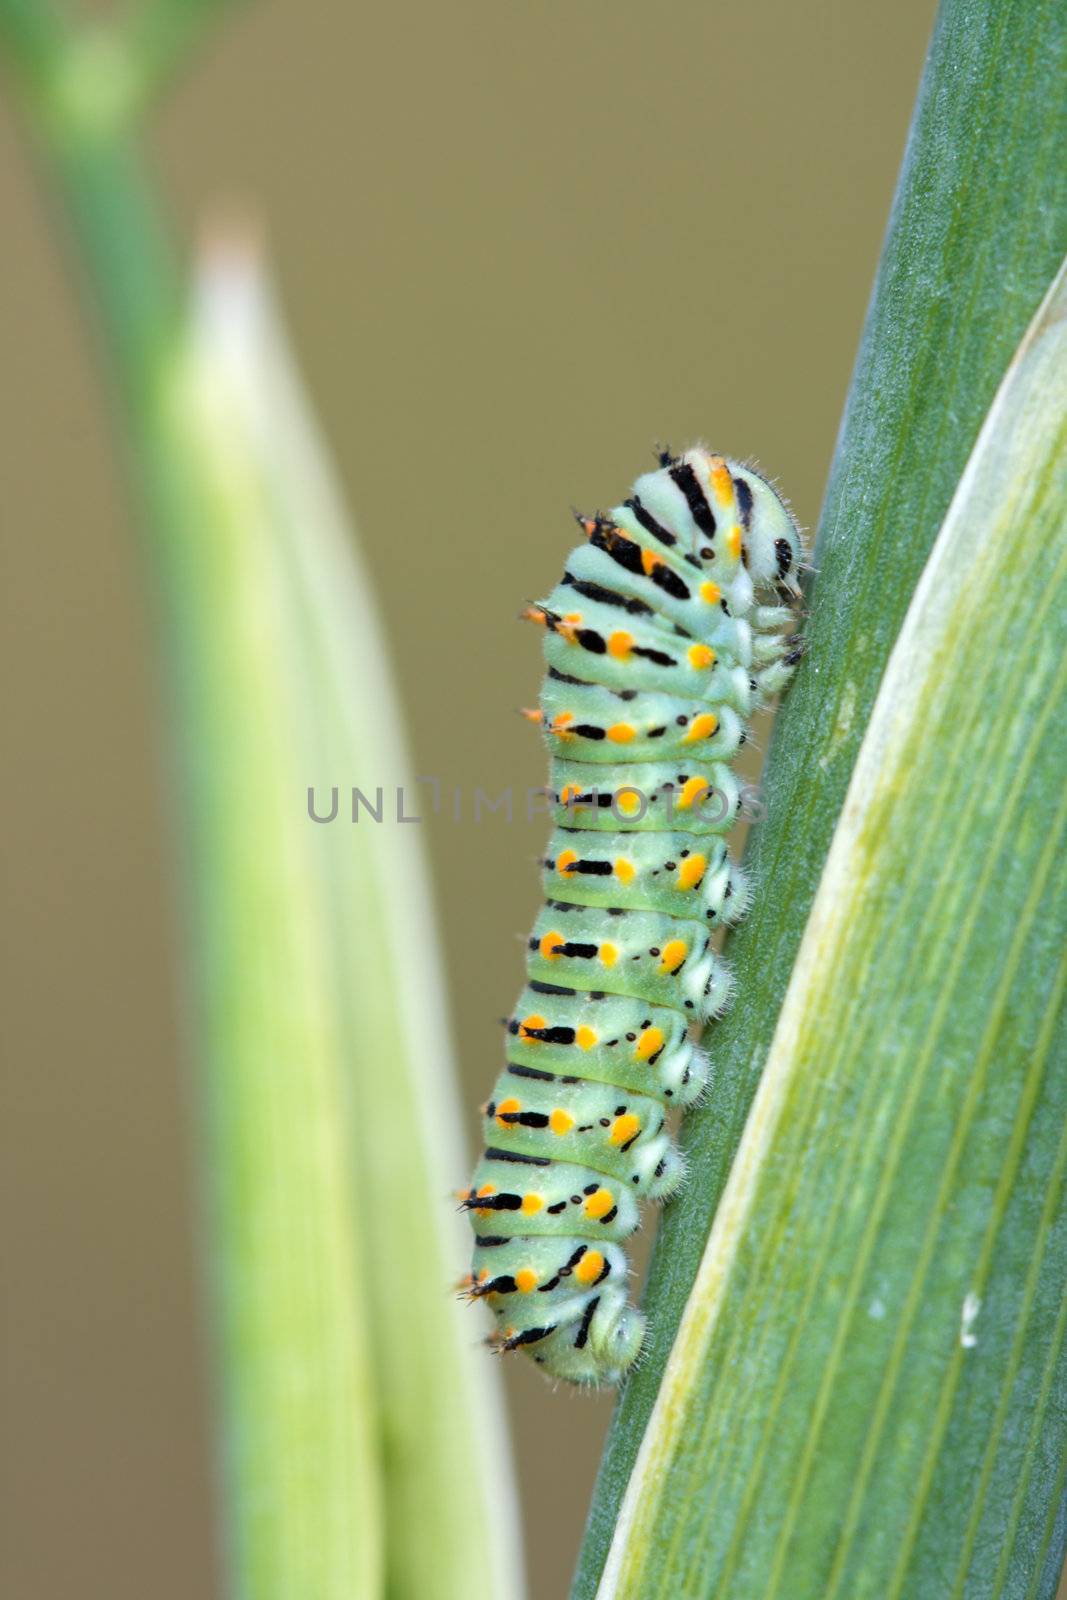 Caterpillar by RuthBlack